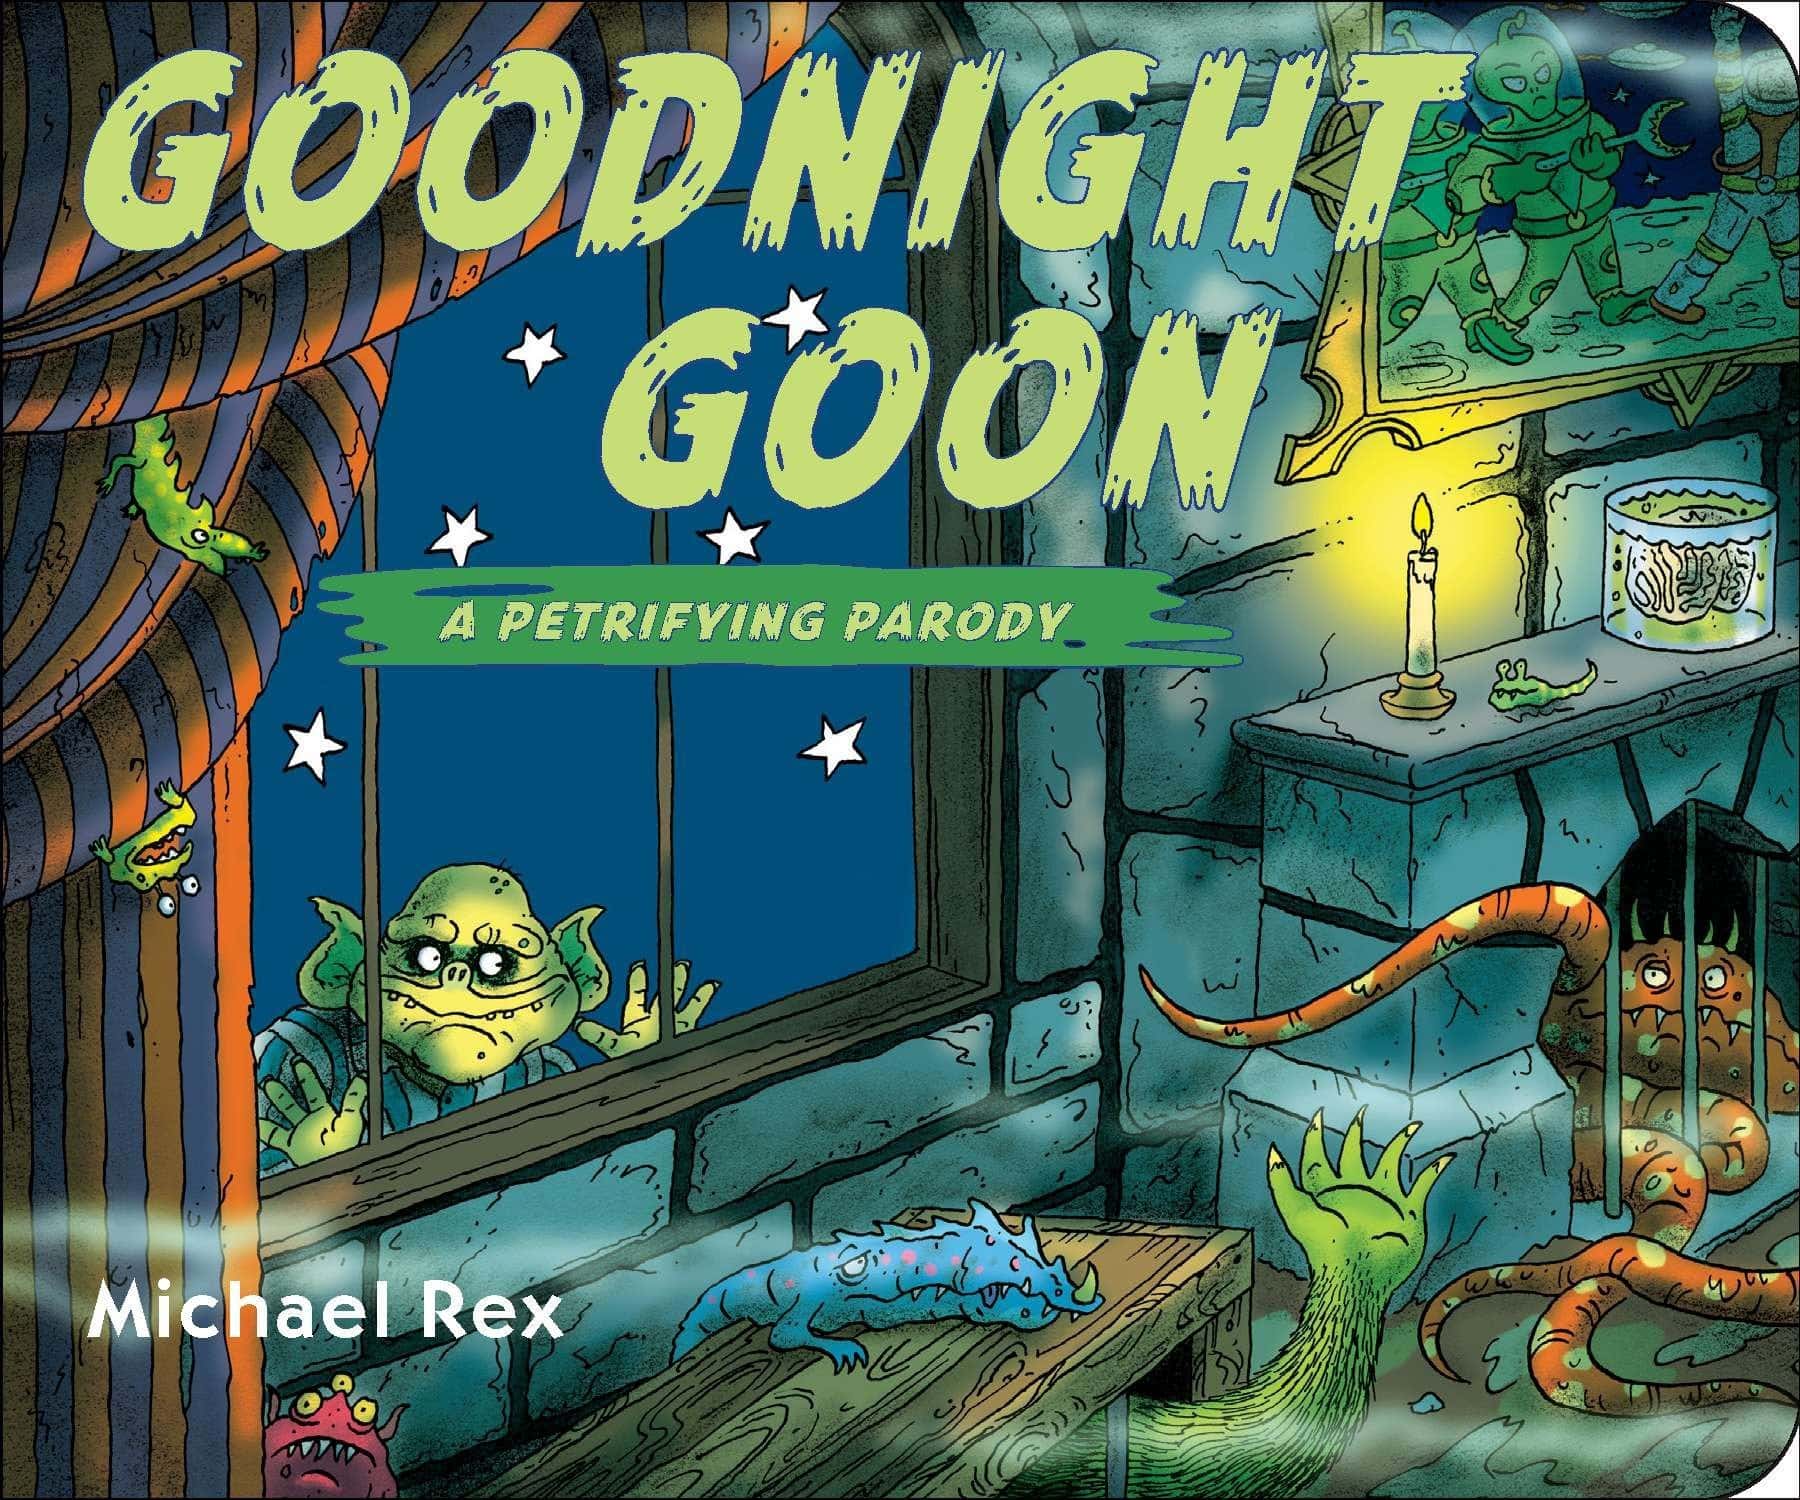 "Goodnight Goon: A Petrifying Parody" by Michael Rex